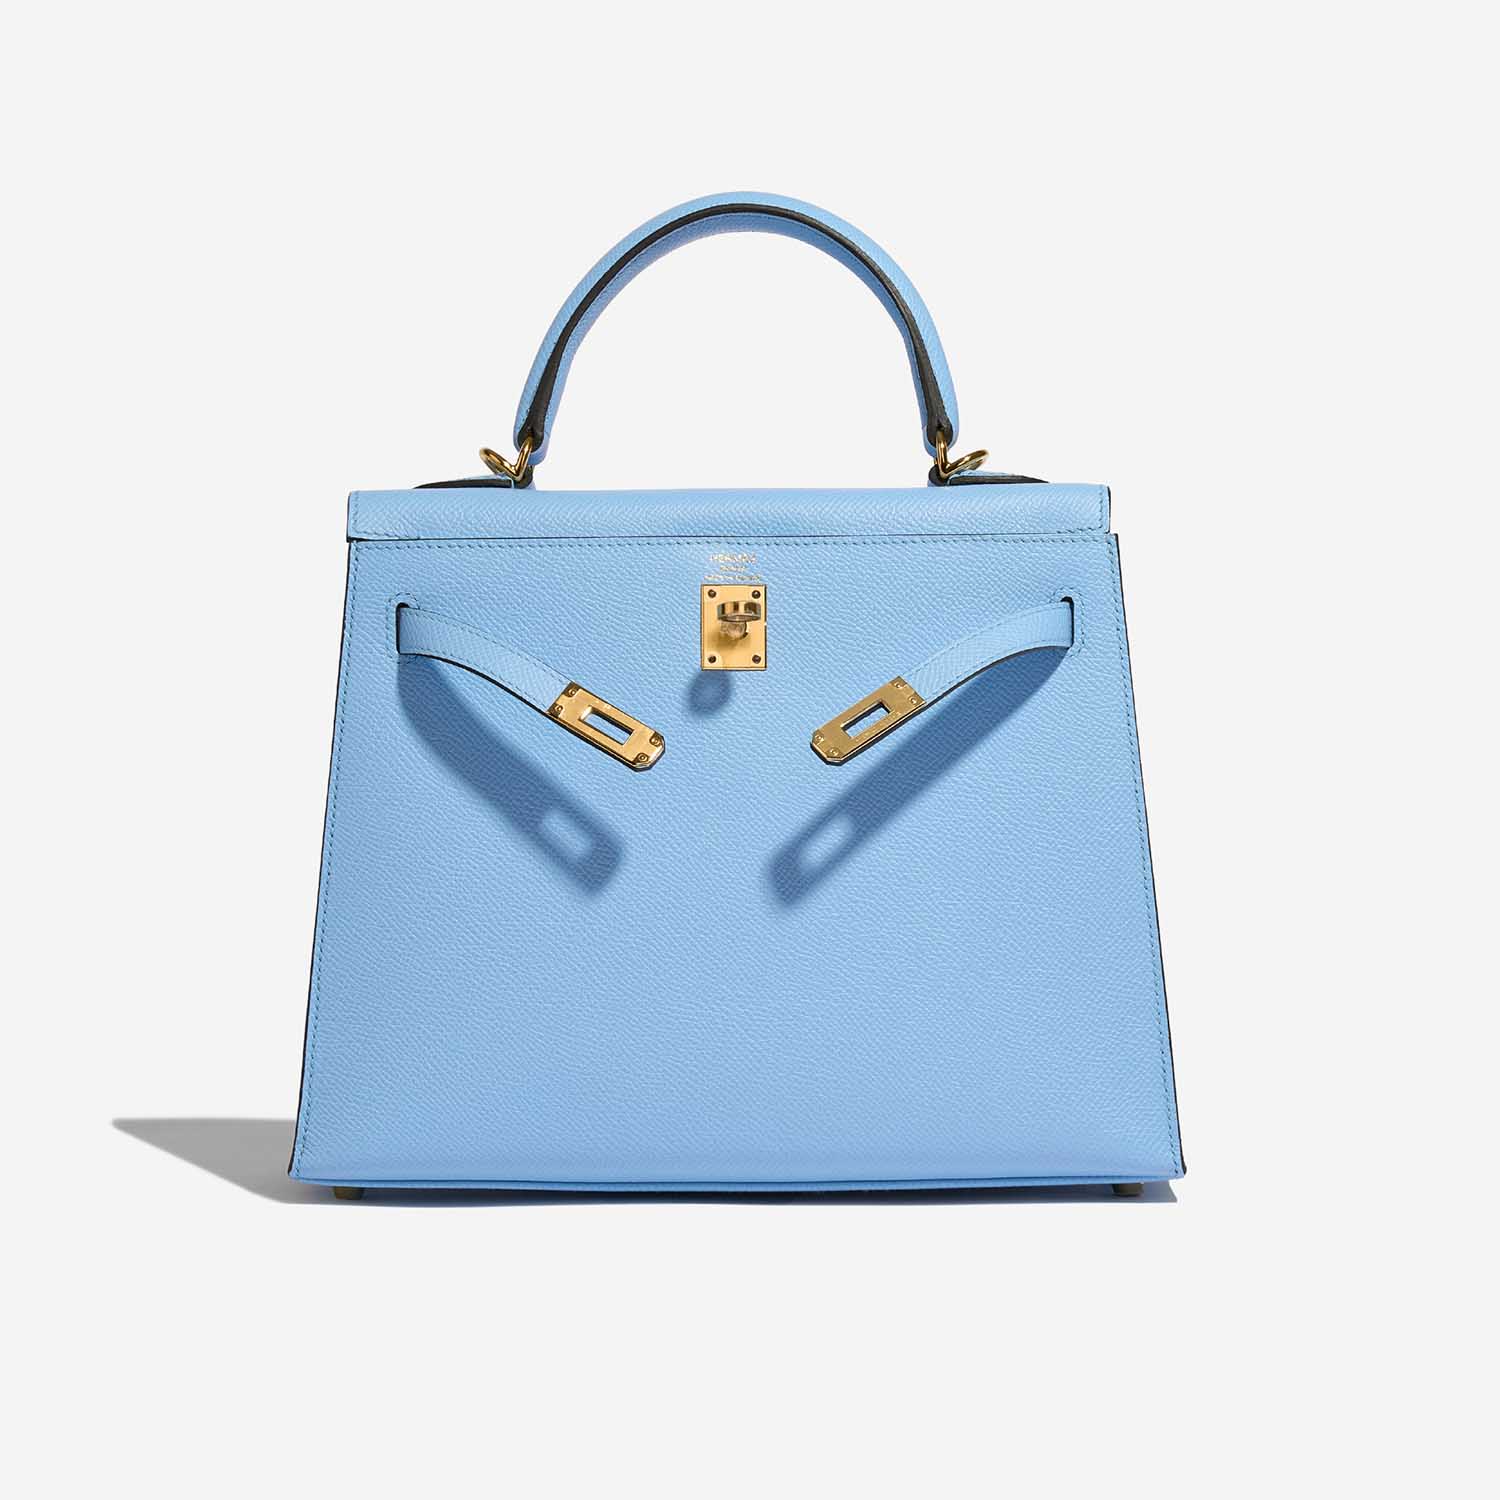 COACH Authentic & Genuine Celeste Signature C Handbag Tote - Brand New |  Bags | Gumtree Australia Melbourne City - Carlton | 1315910747